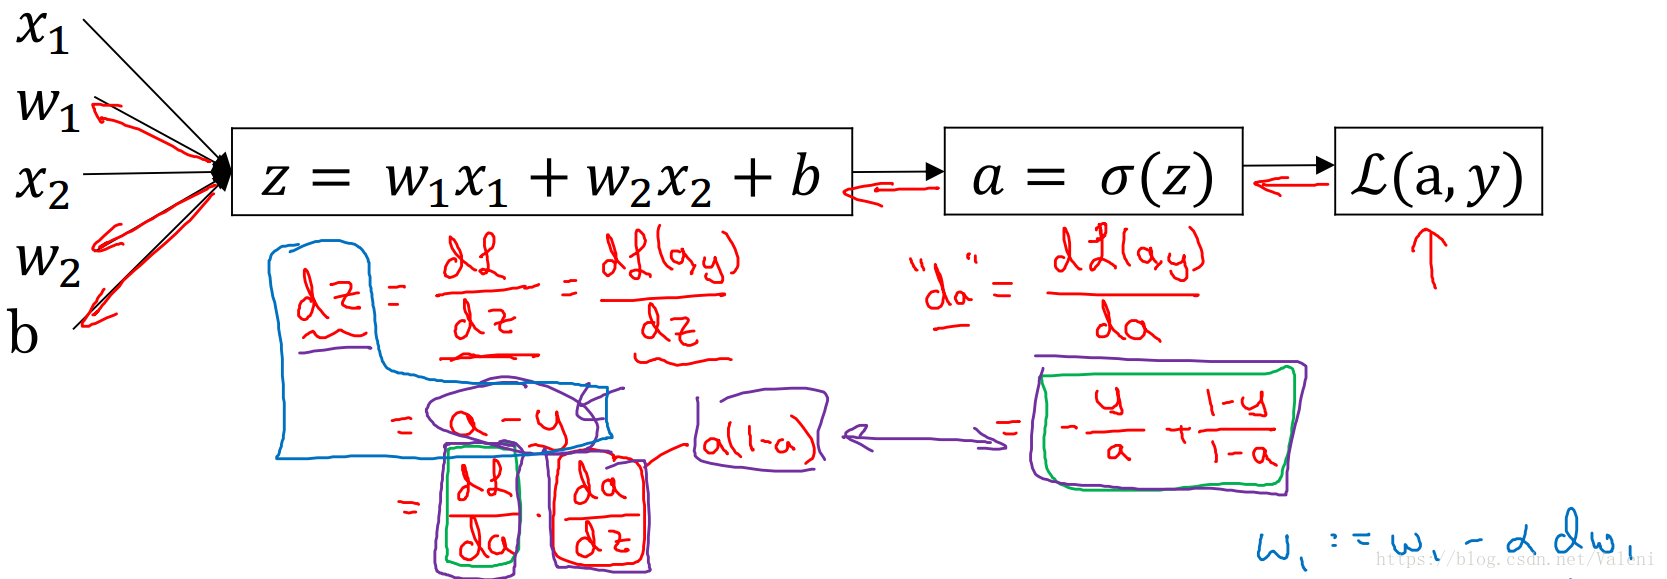 Logistic regression computation graph